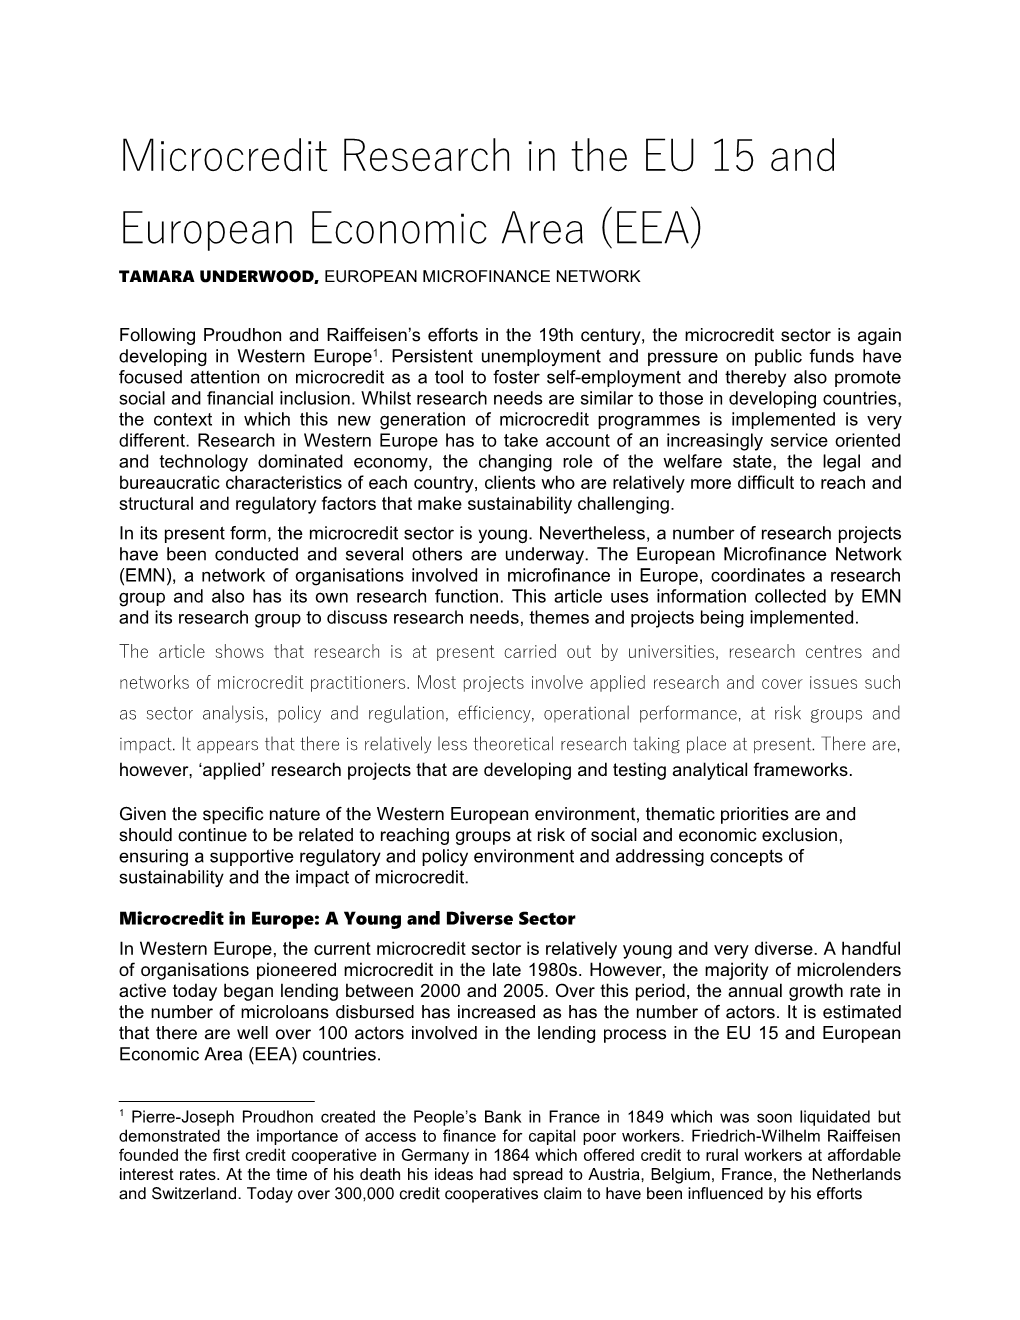 Microcredit Research in the EU 15 and European Economic Area (EEA)